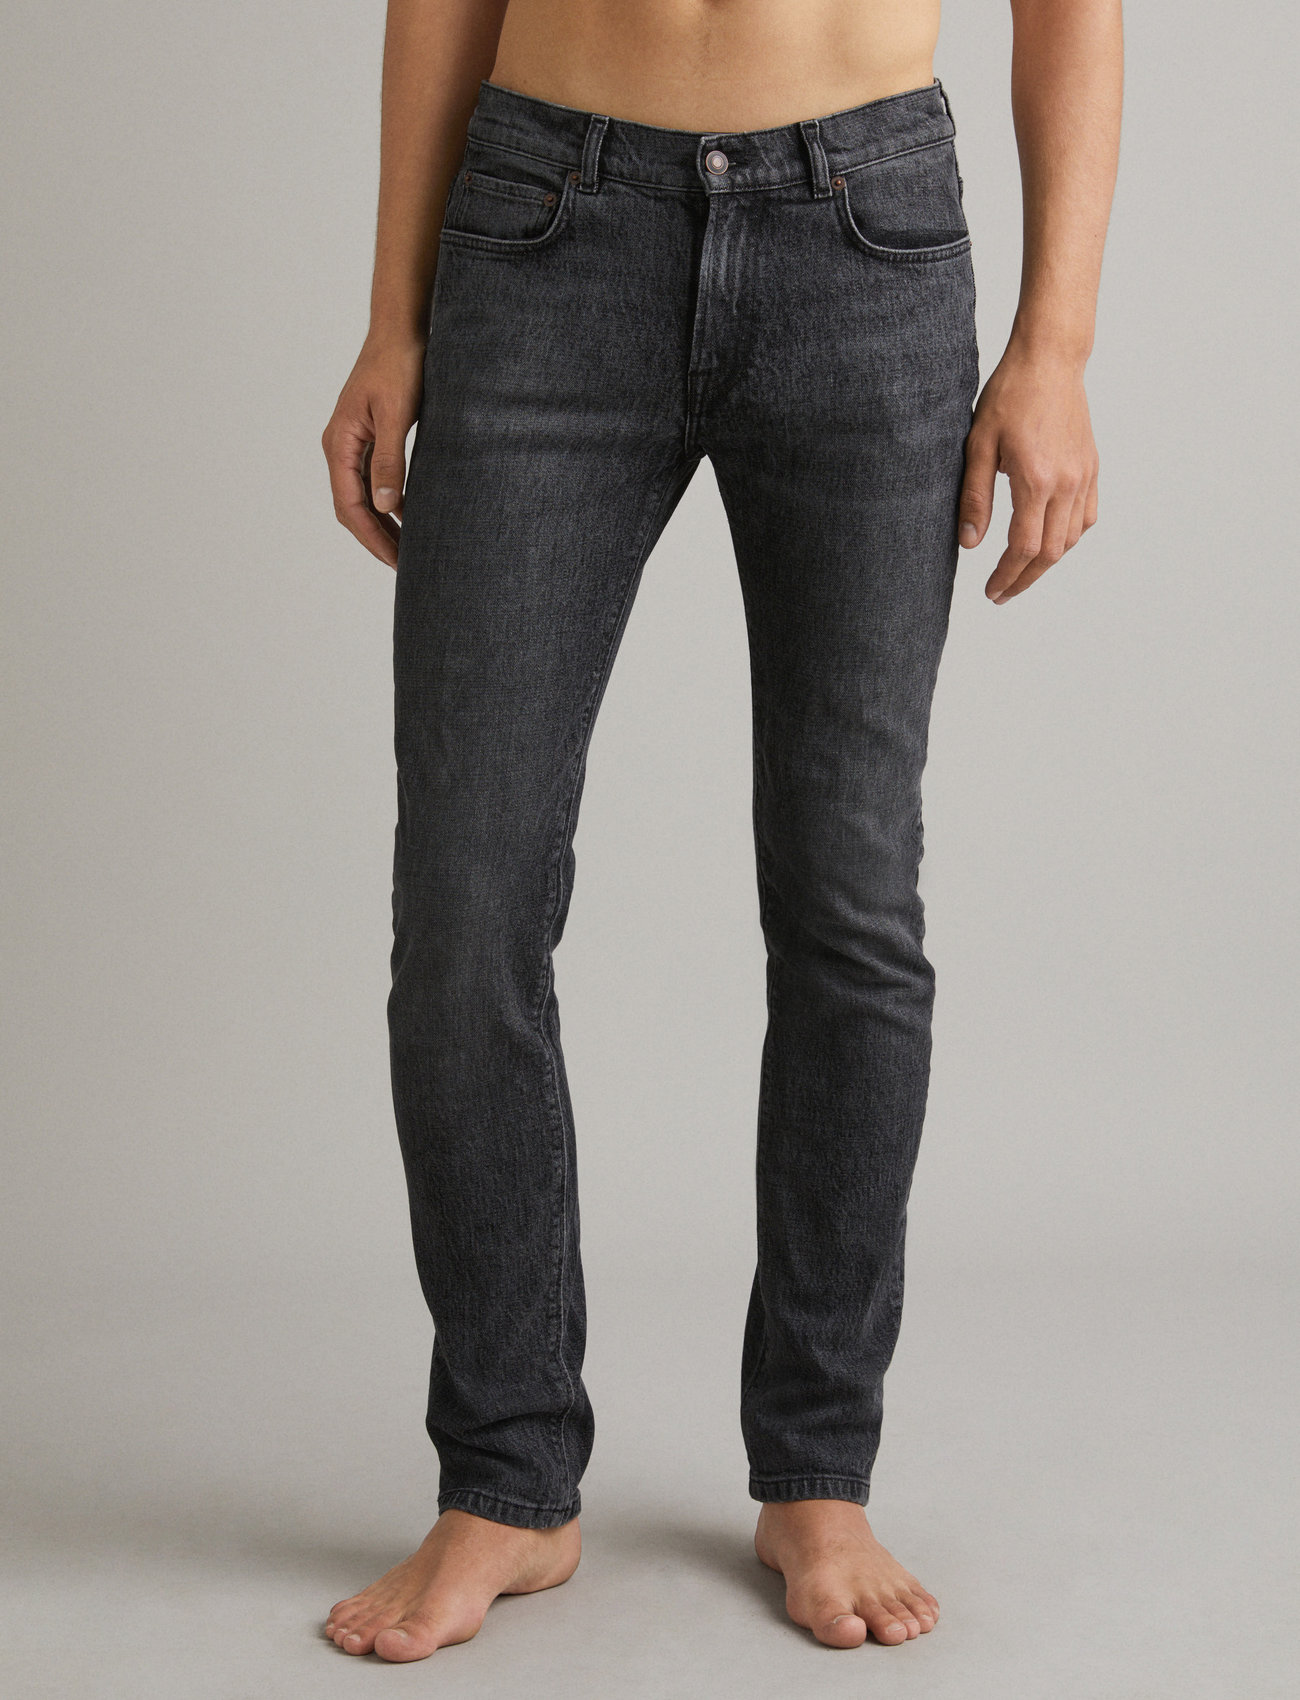 Jeanerica - SM001 Slim Jeans - chemises basiques - blackvintage82 - 0